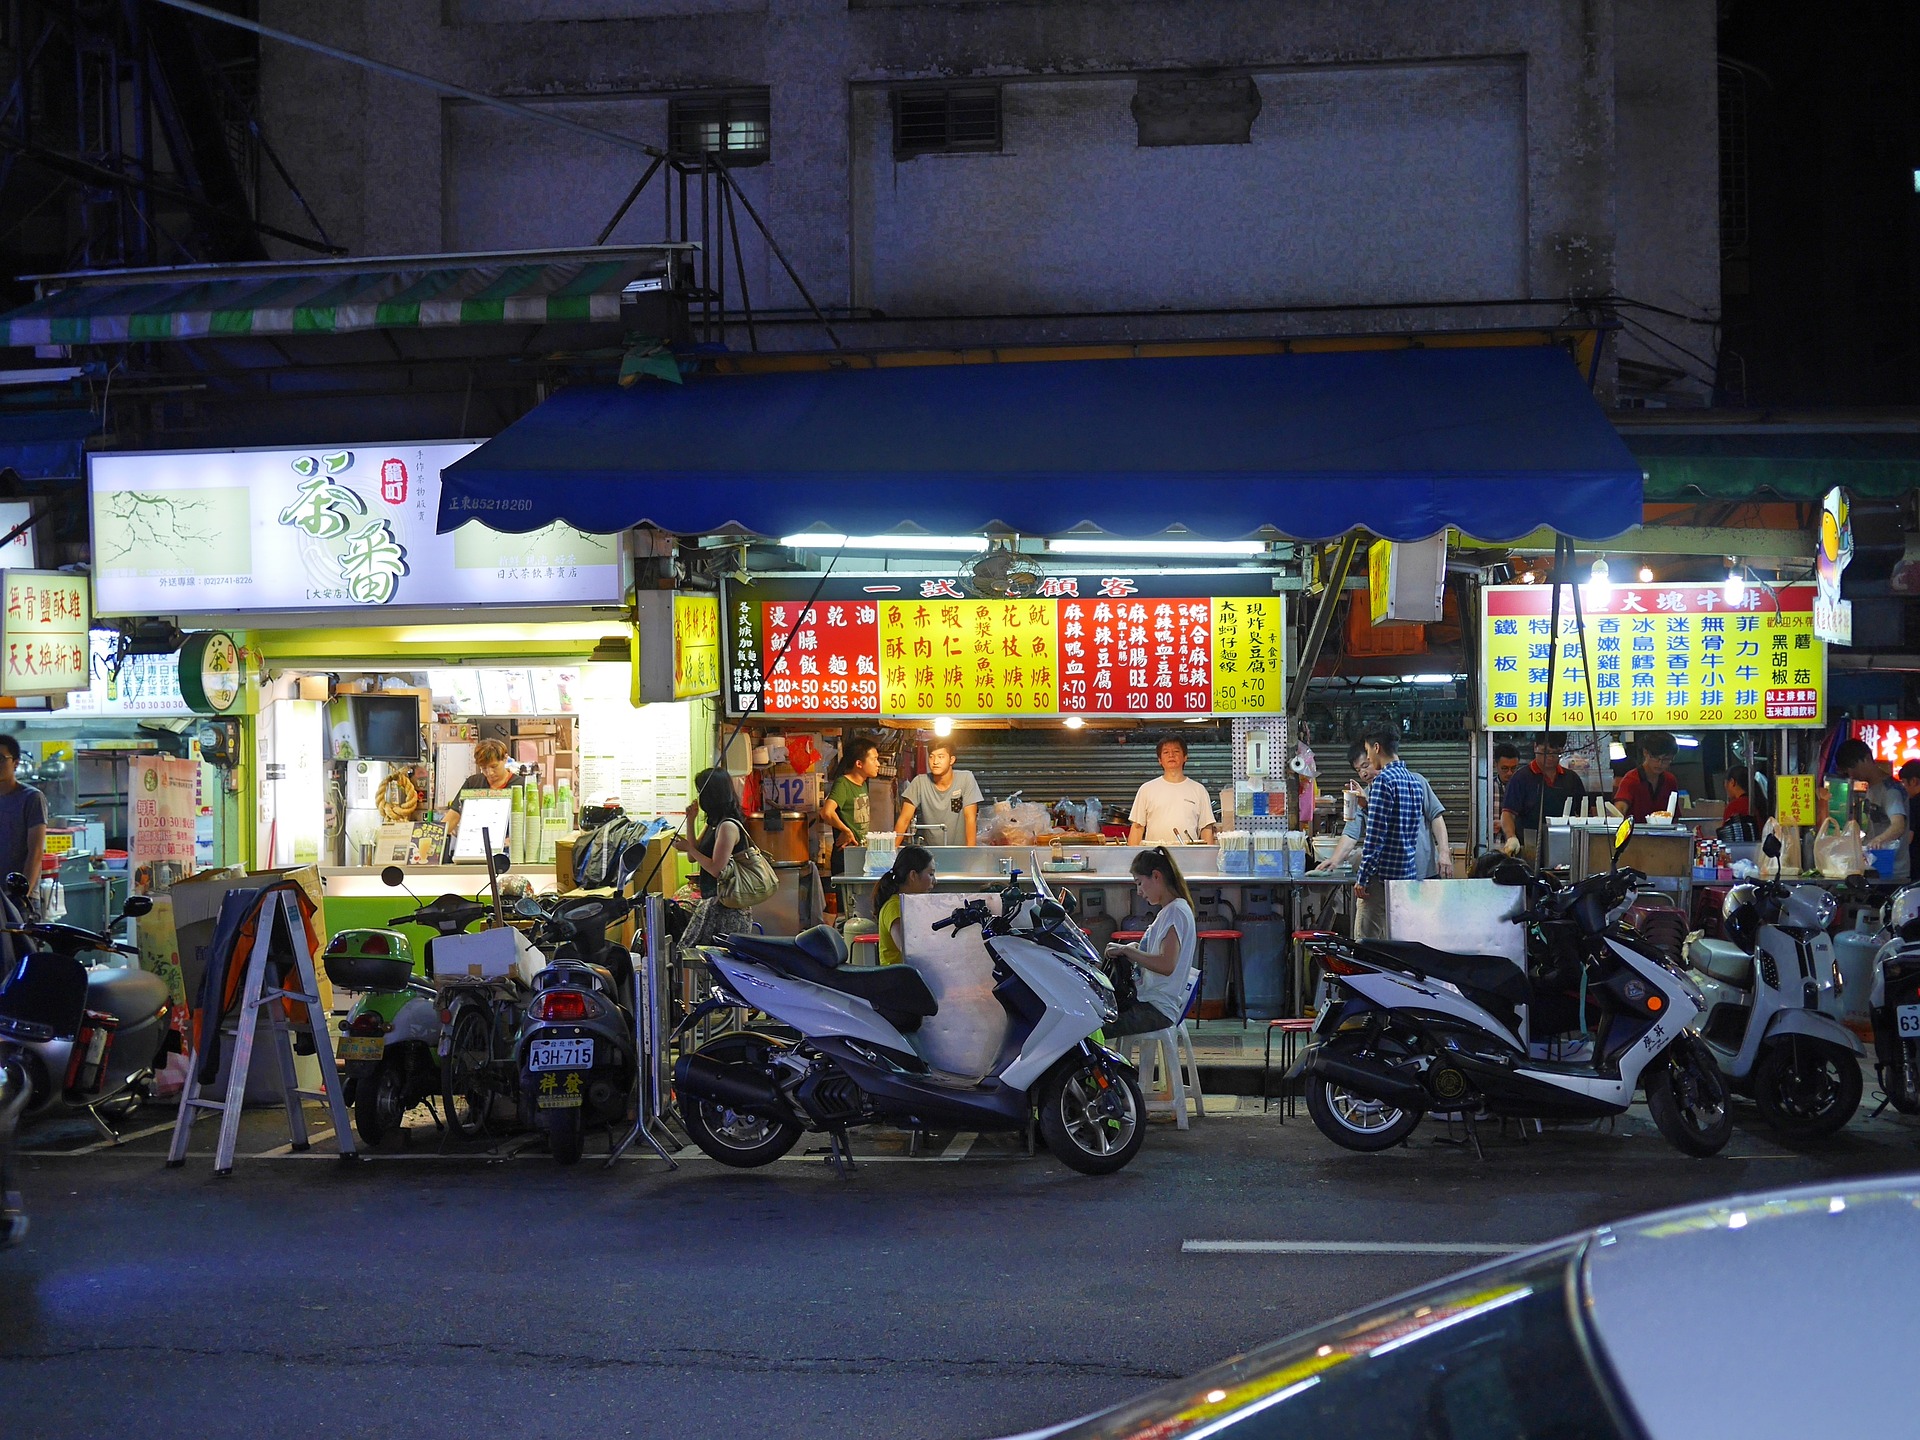 Food vendors in Taiwan